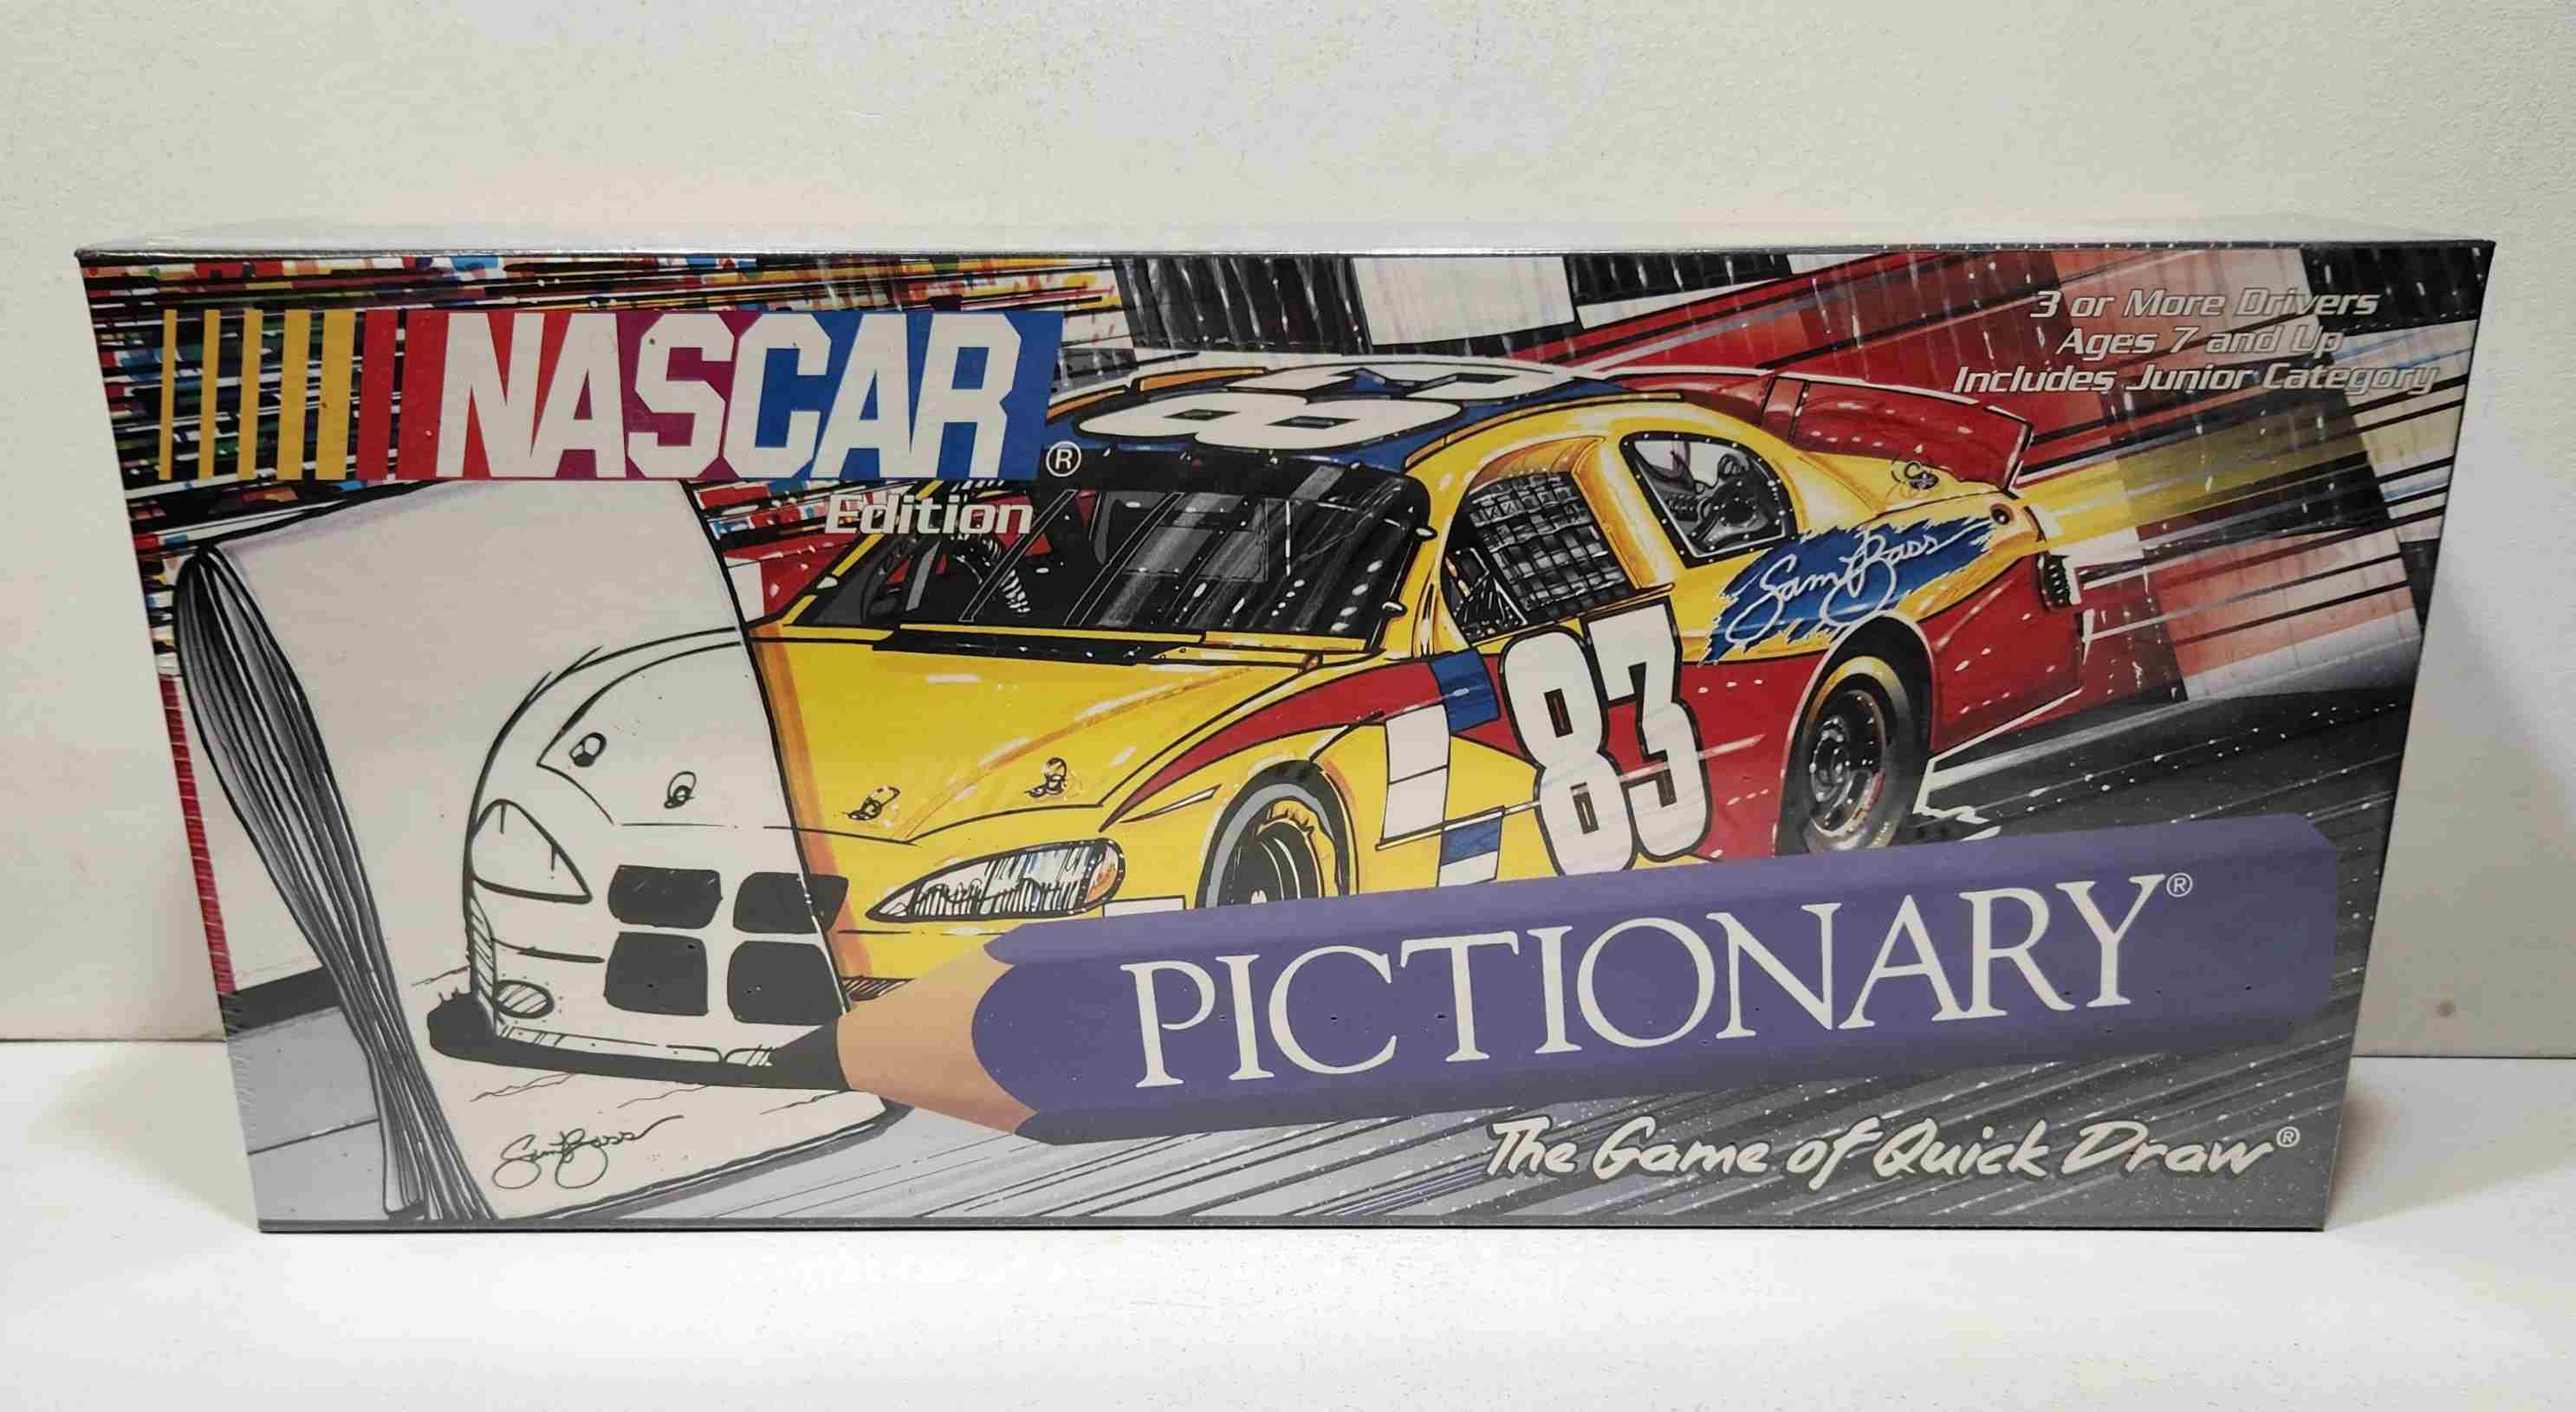 2001 NASCAR Edition Pictionary